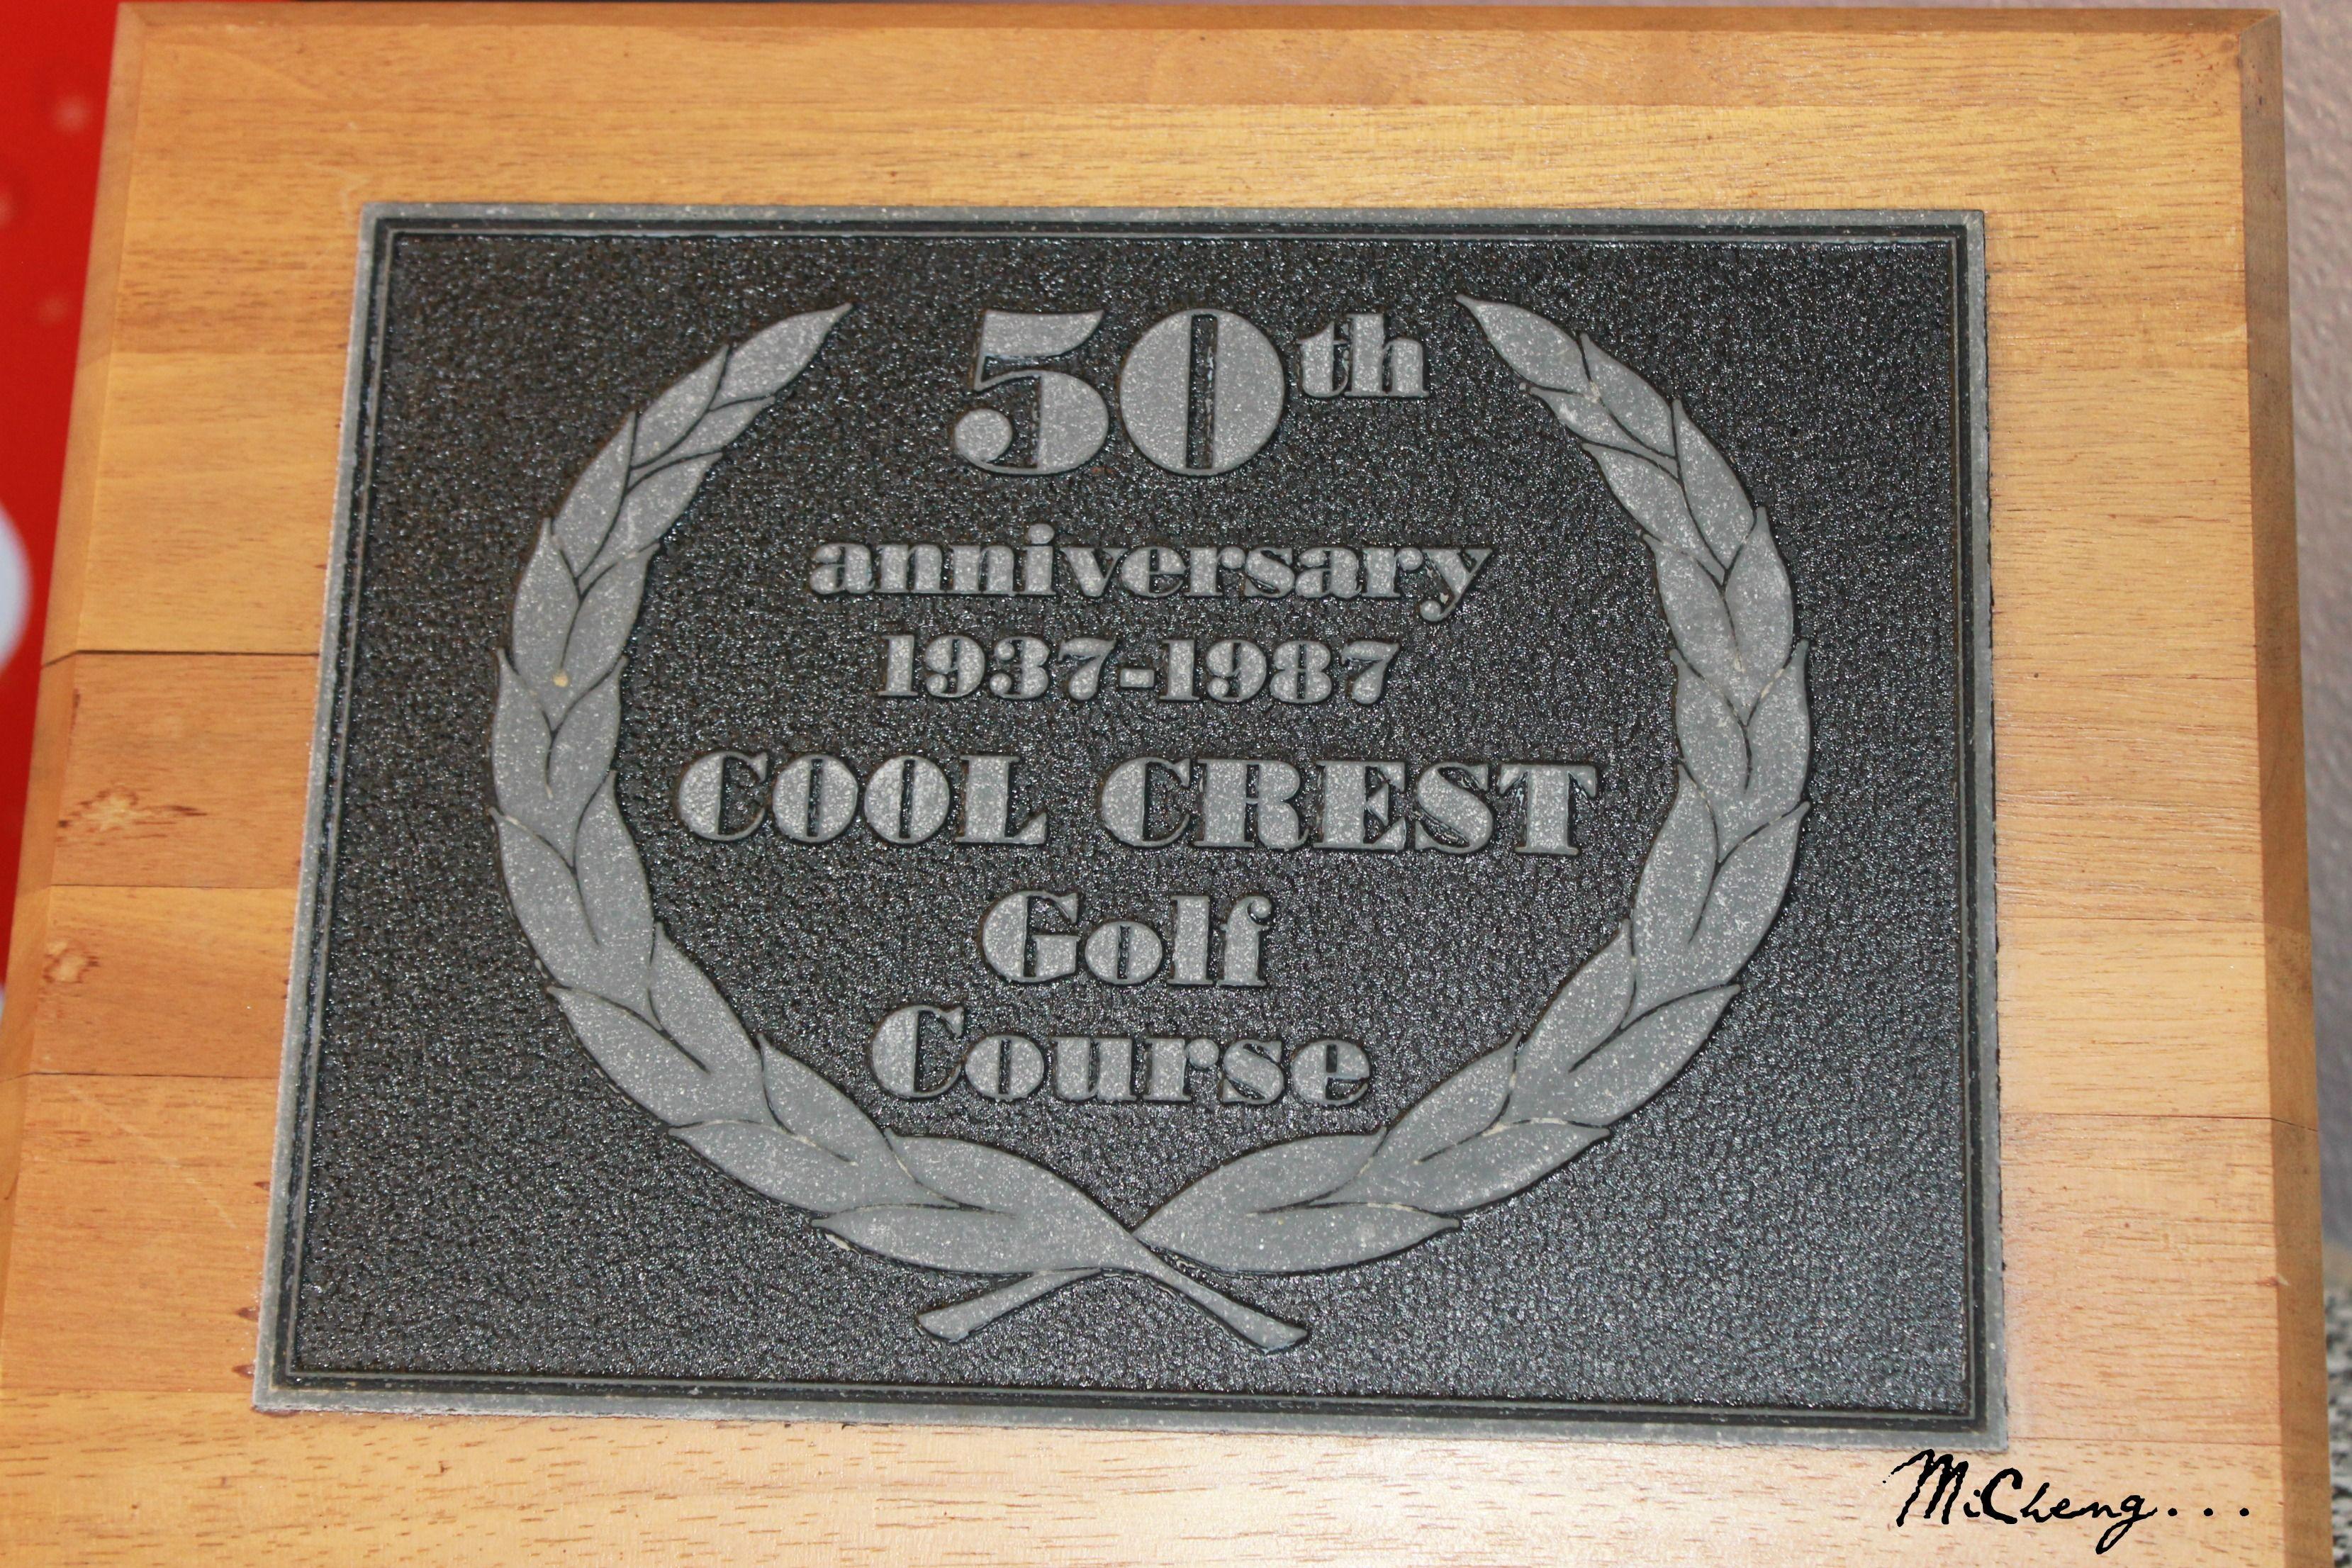 Cool Crest Logo - Cool Crest Miniature Golf Course San Antonio = The coolest Golf